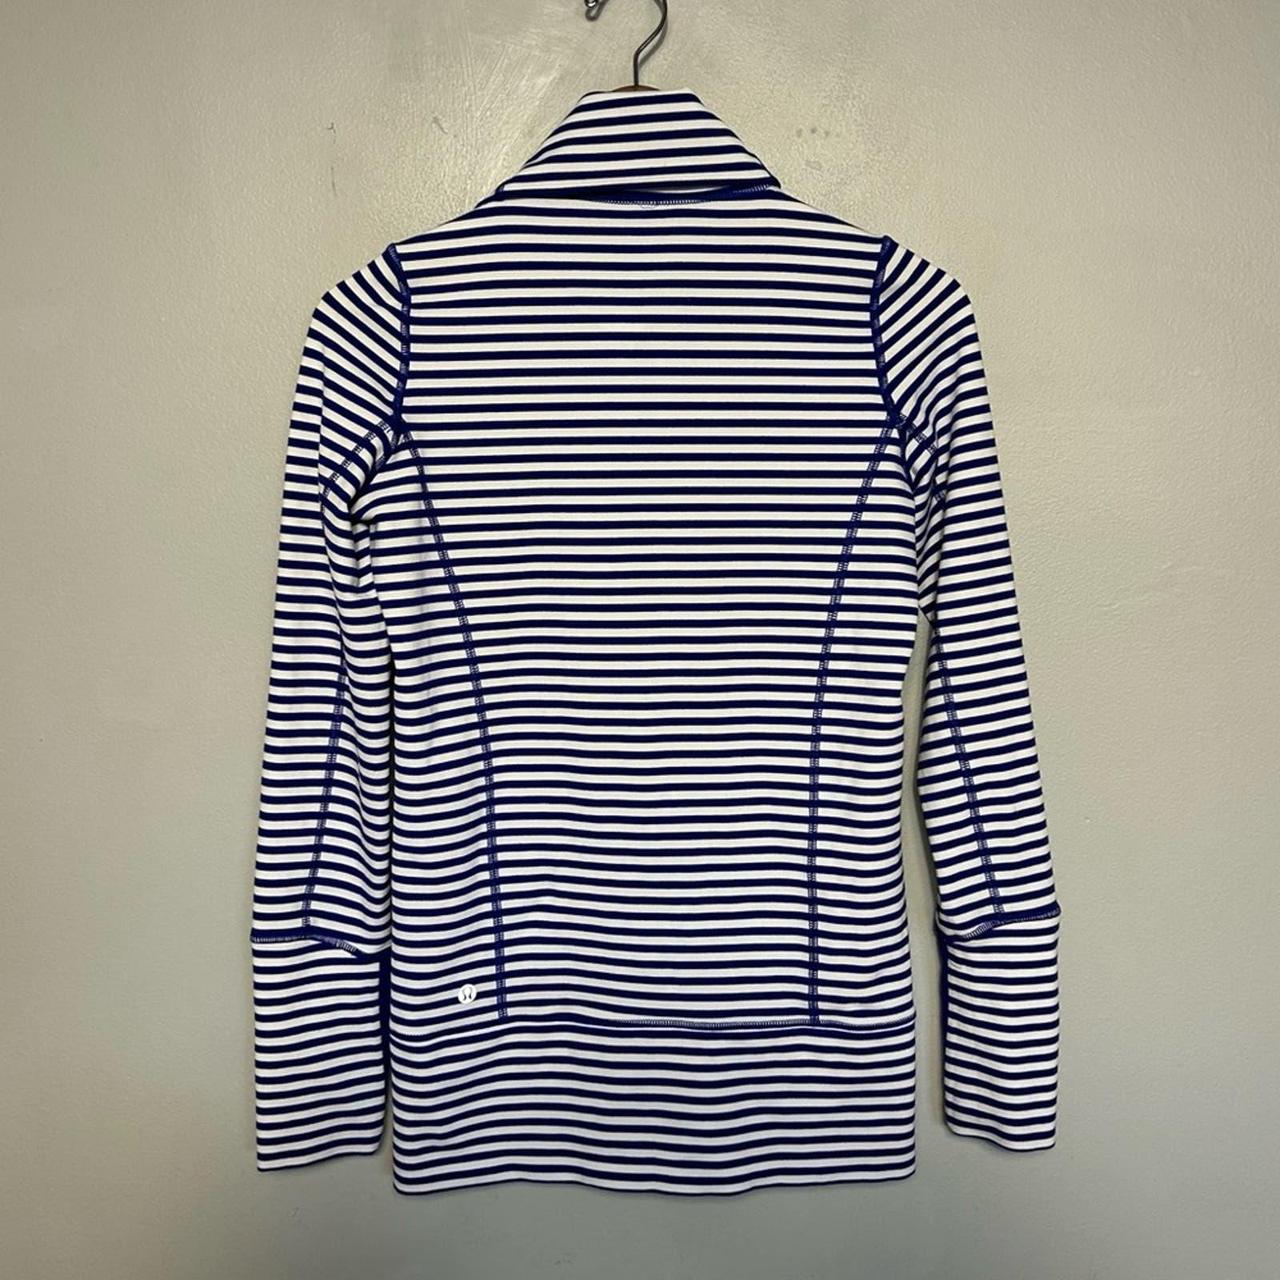 LULULEMON Stride Jacket Blue & White Striped Size 4 - Depop